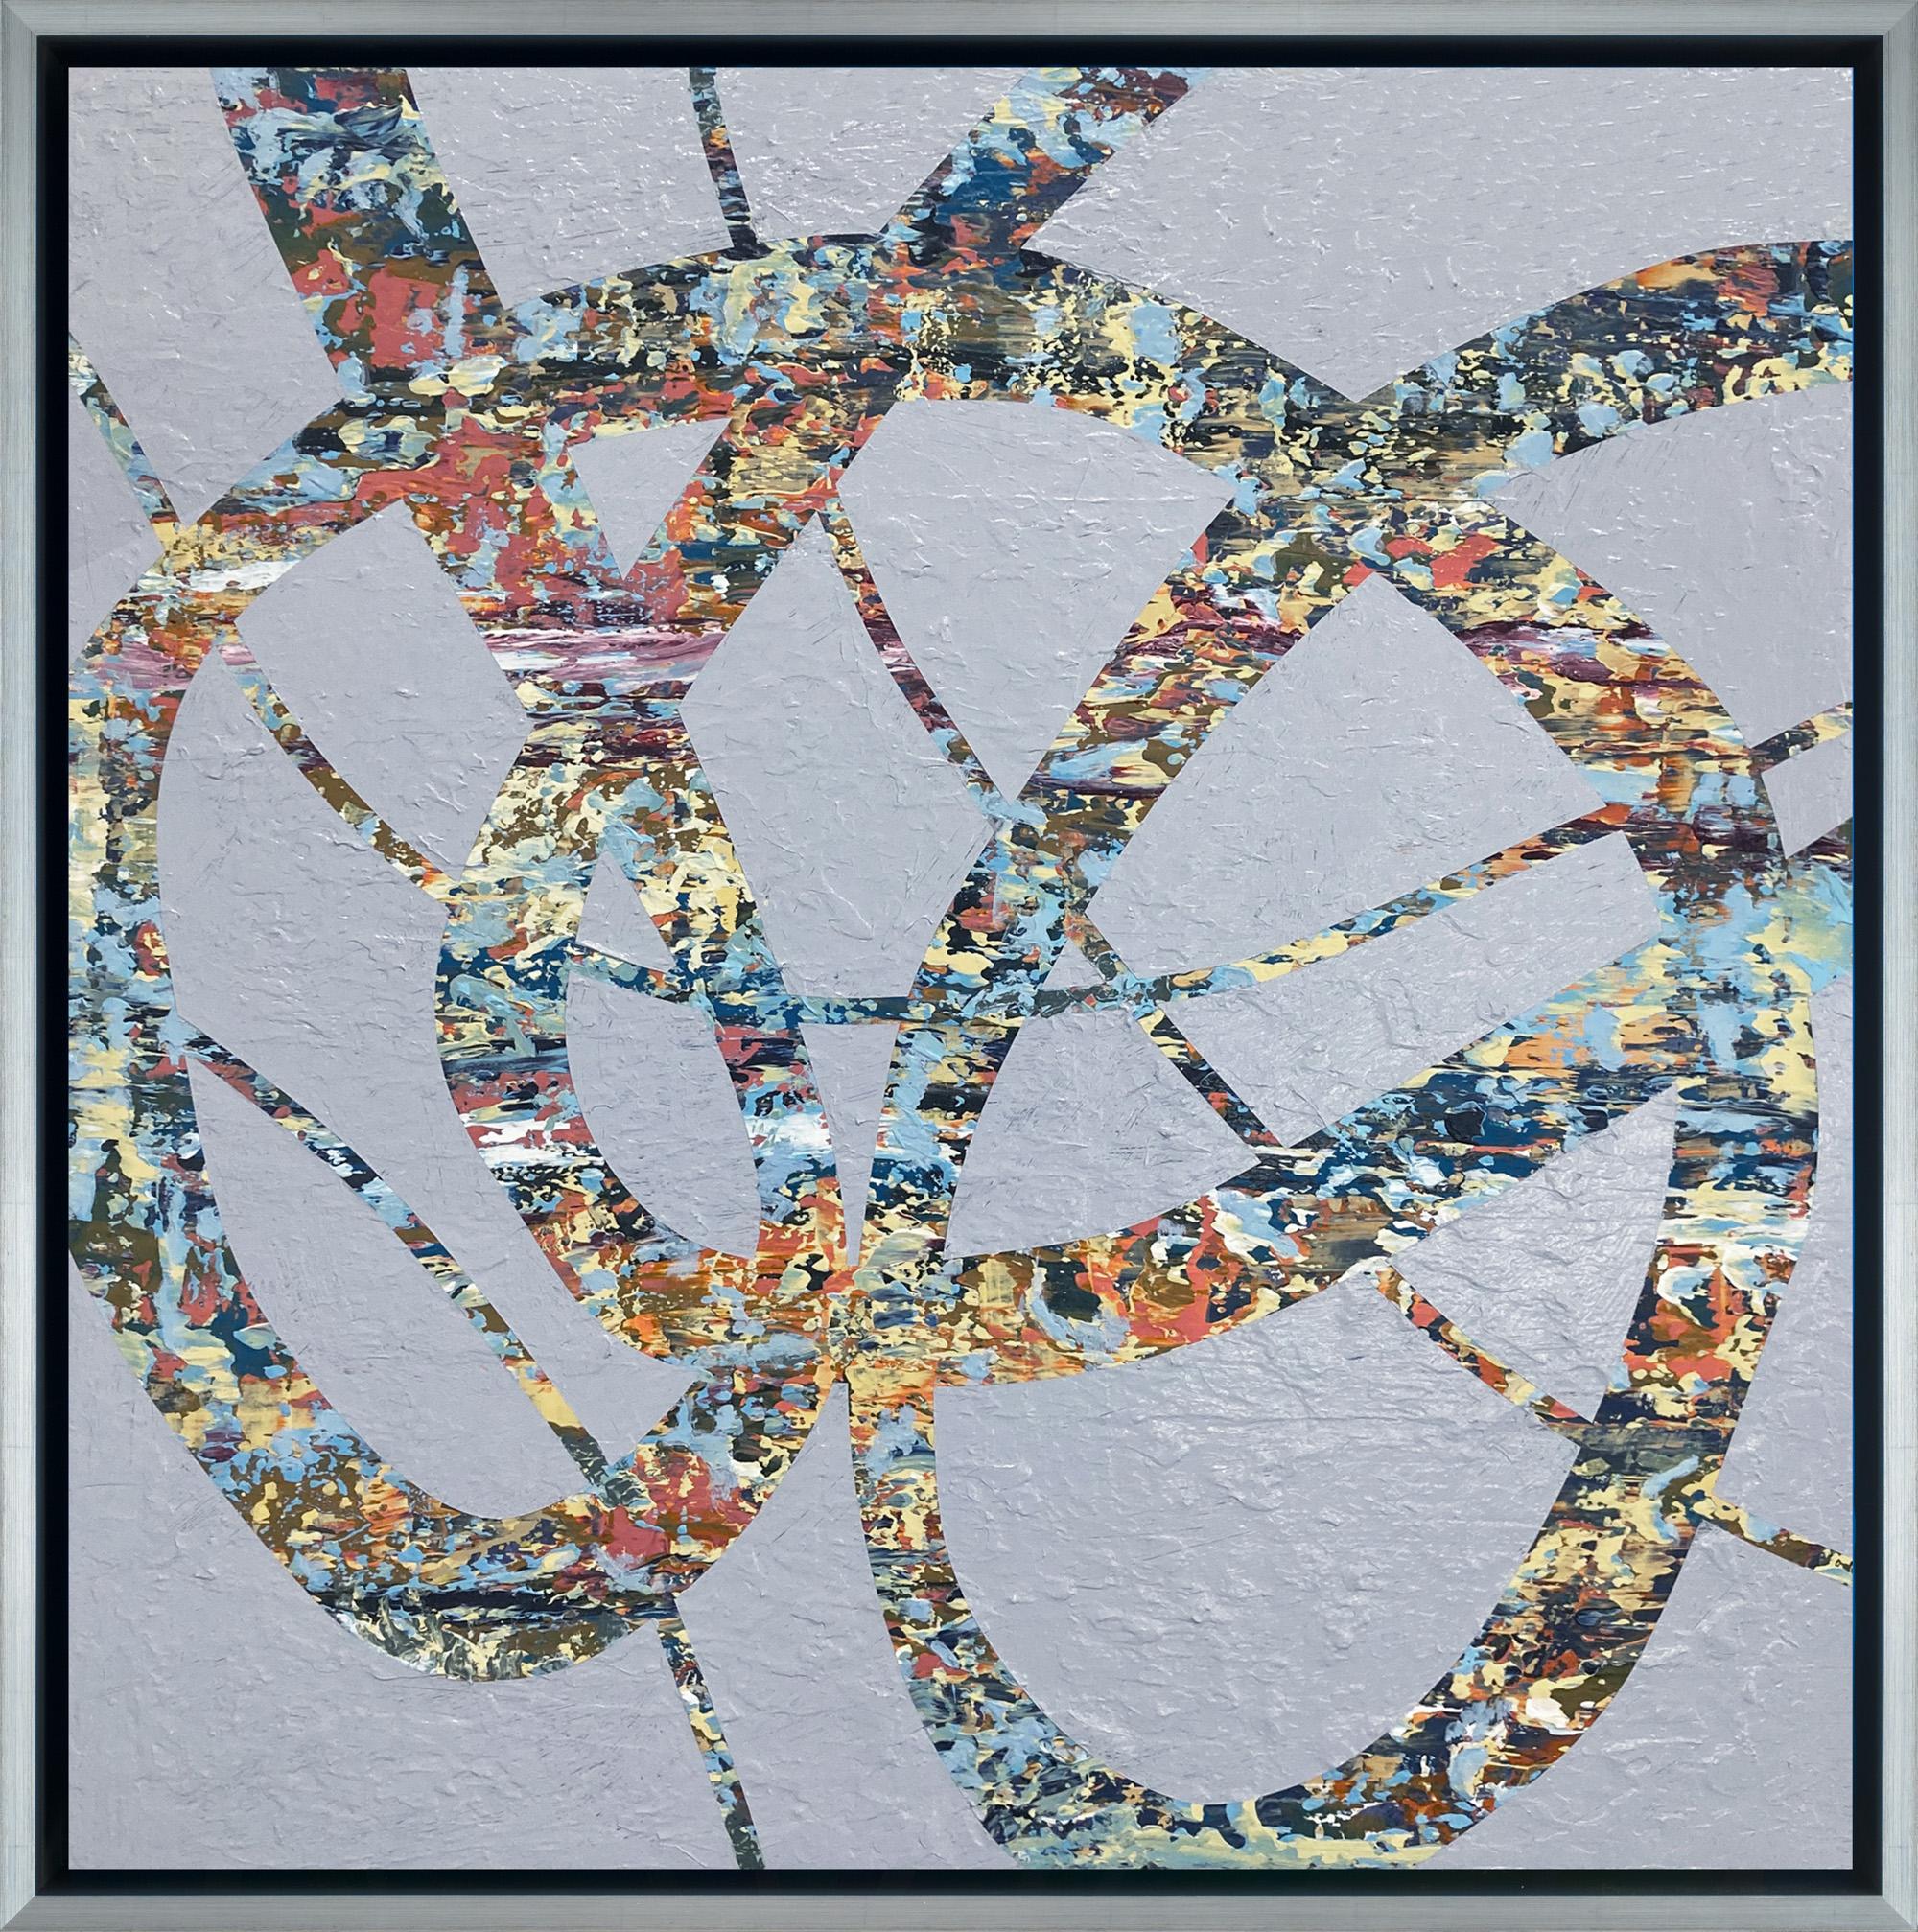 David Skillicorn Abstract Painting - "Wabi-Sabi 10-6" Dynamic Flowing Mixed Media Abstract in Vibrant Colors